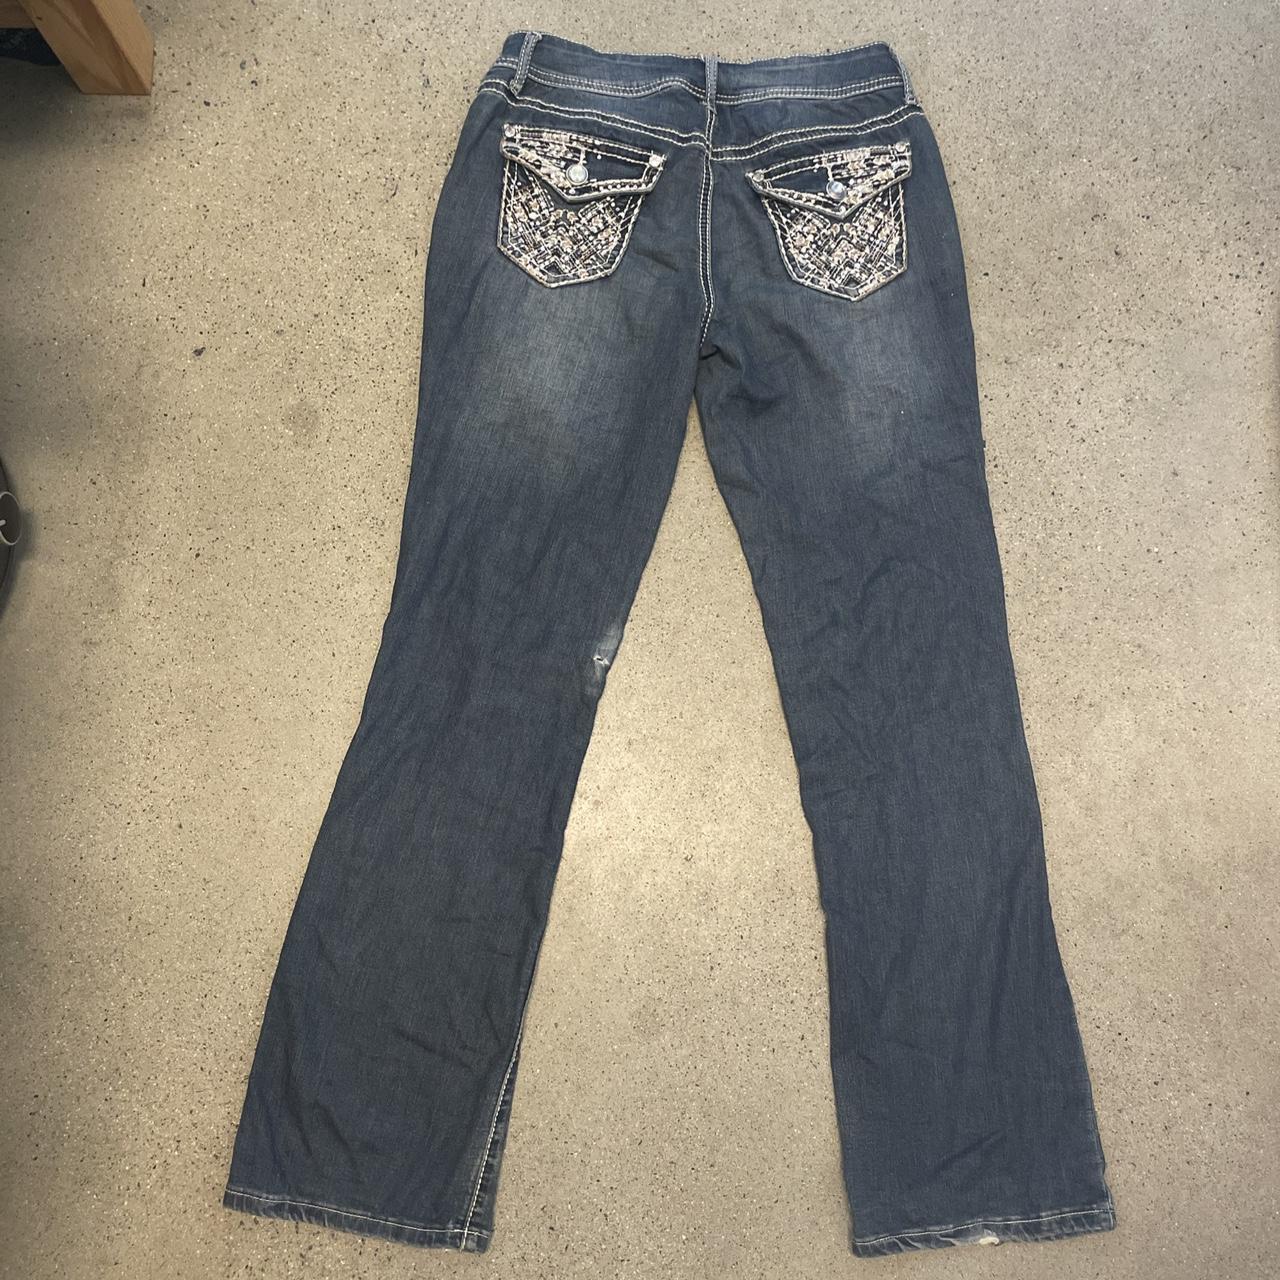 Apt. 9 Rhinestone Boot Cut Jeans